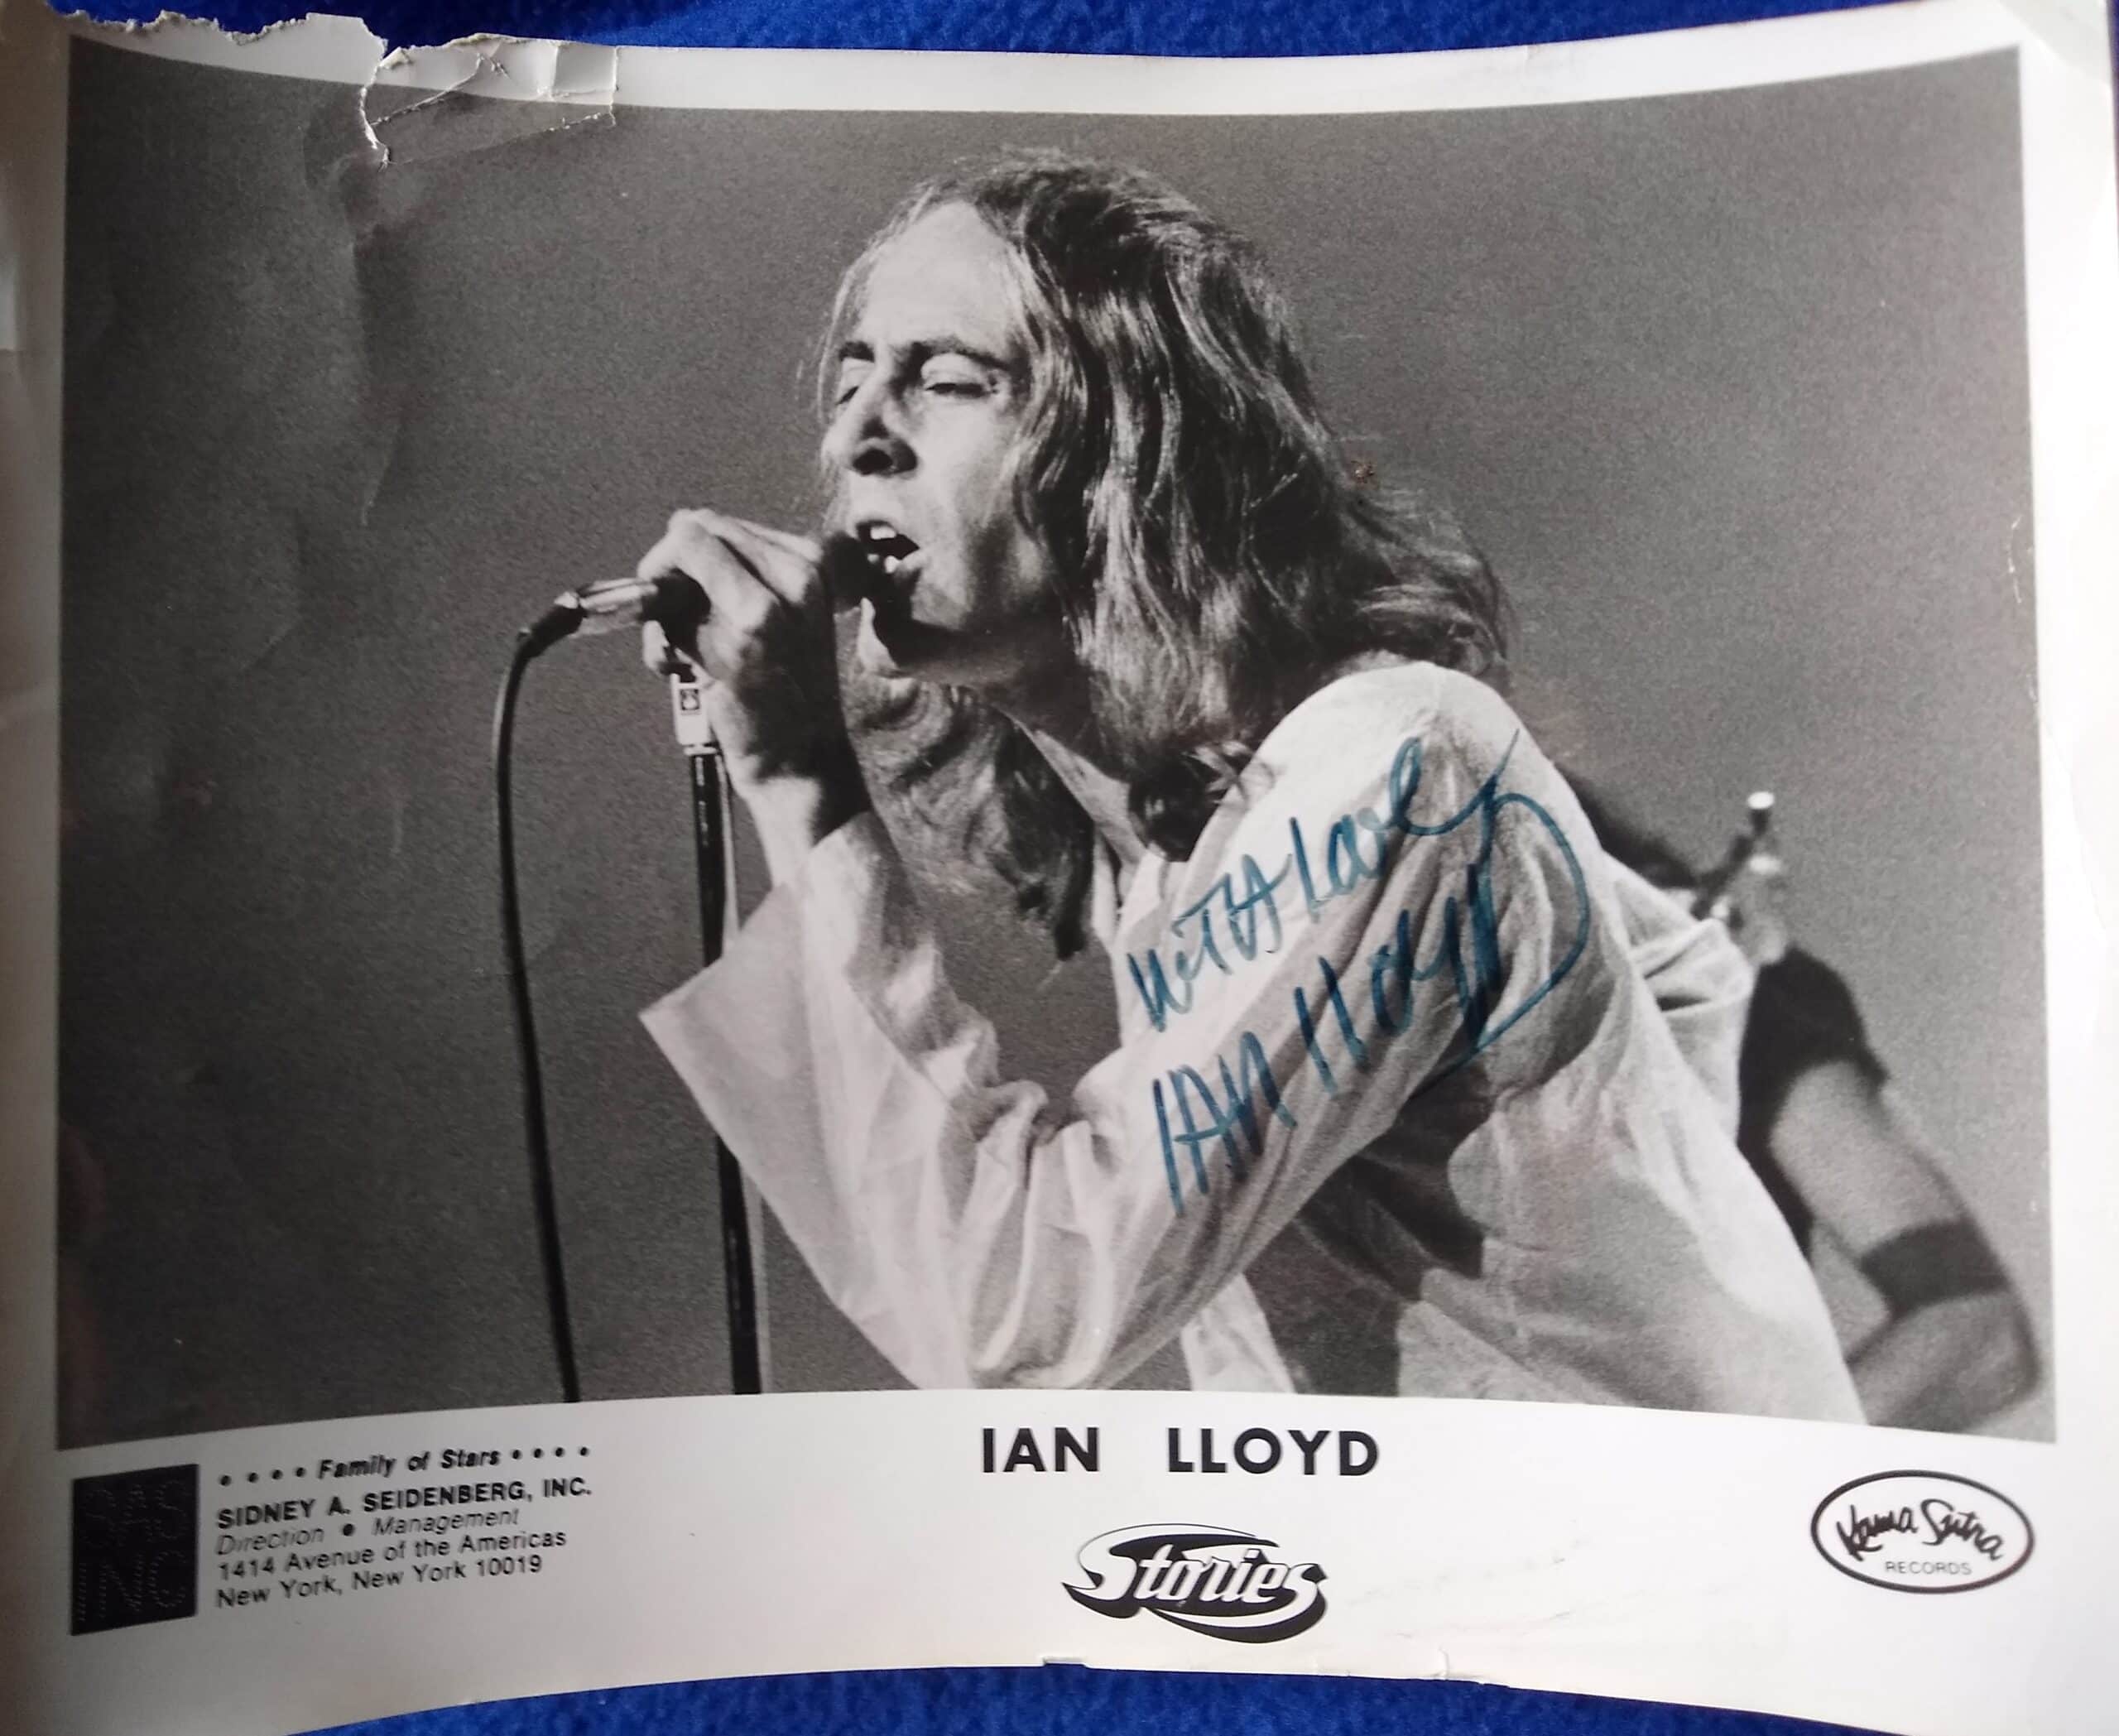 Ian Lloyd promo photo, courtesy of Kama Sutra Records.